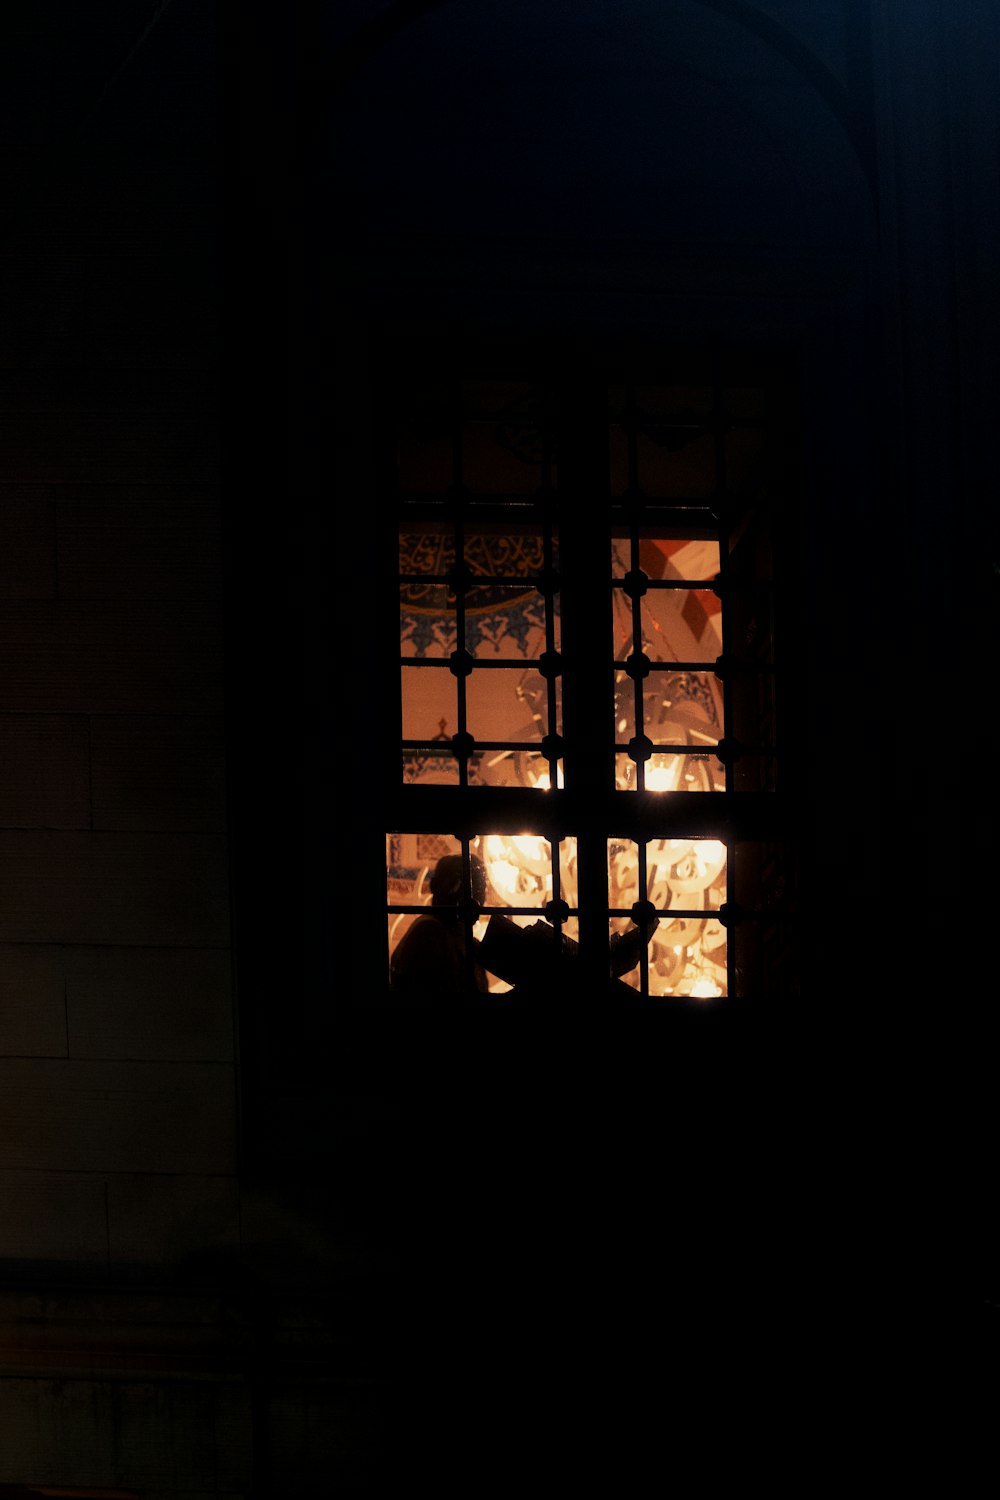 a window with a light inside